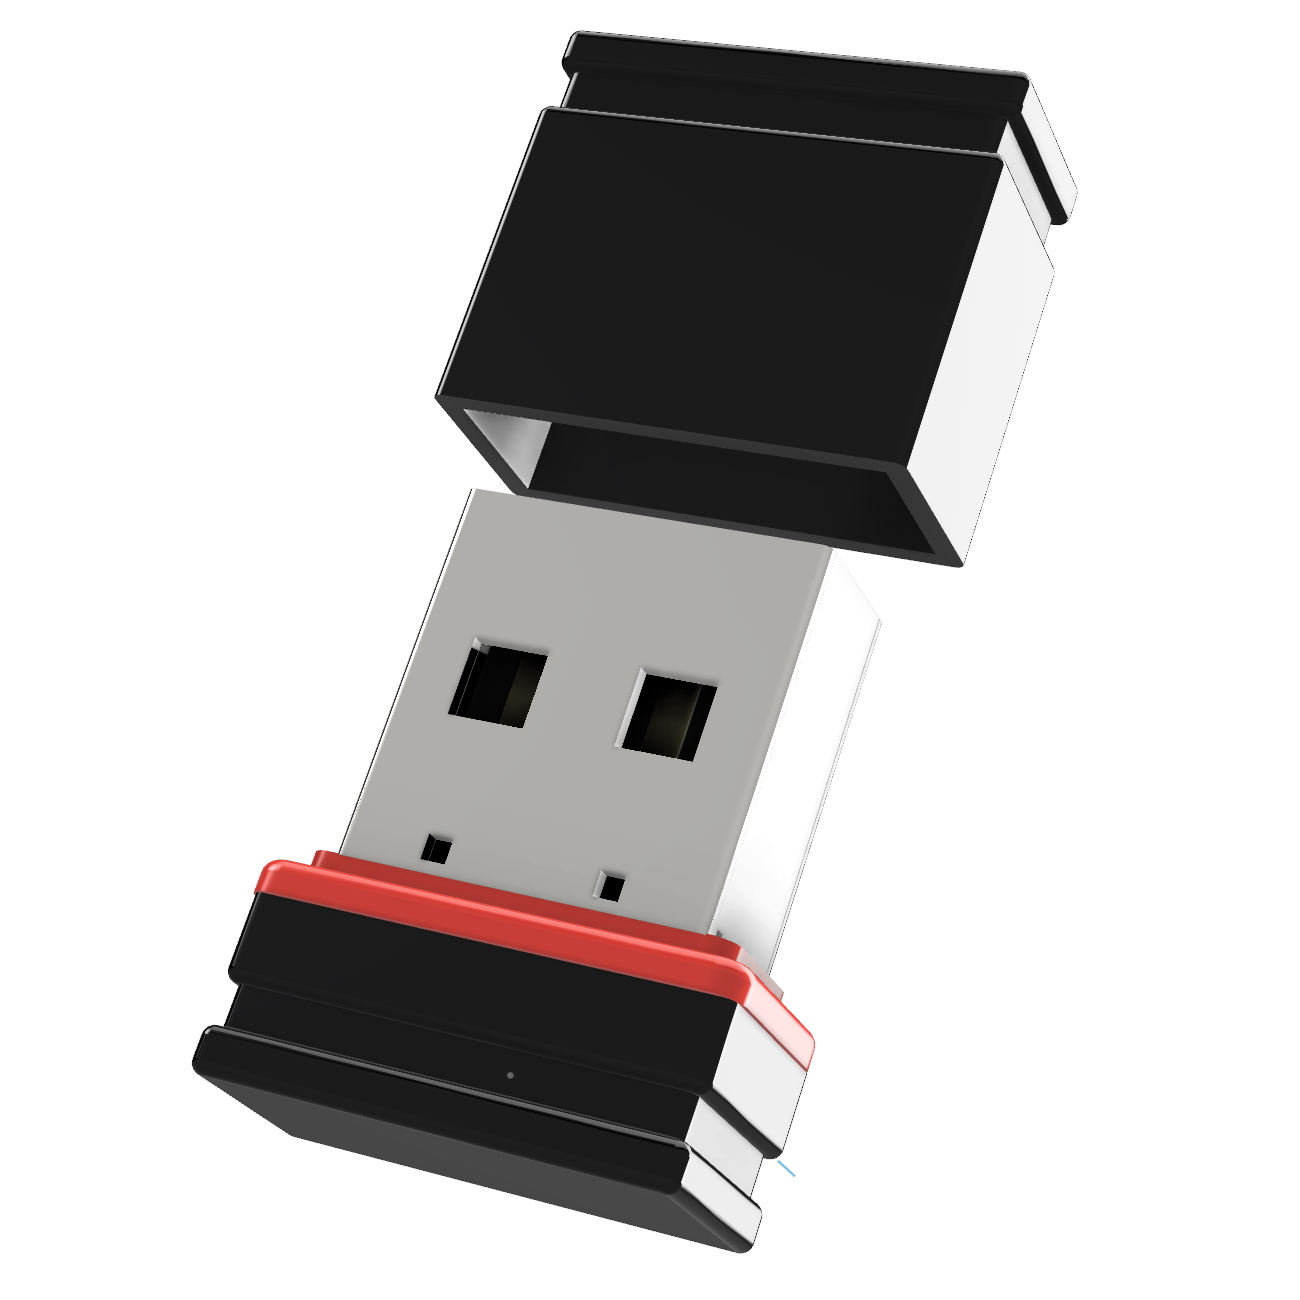 P1 GB) (Schwarz/Rot, 1 Mini GERMANY ®ULTRA USB-Stick USB